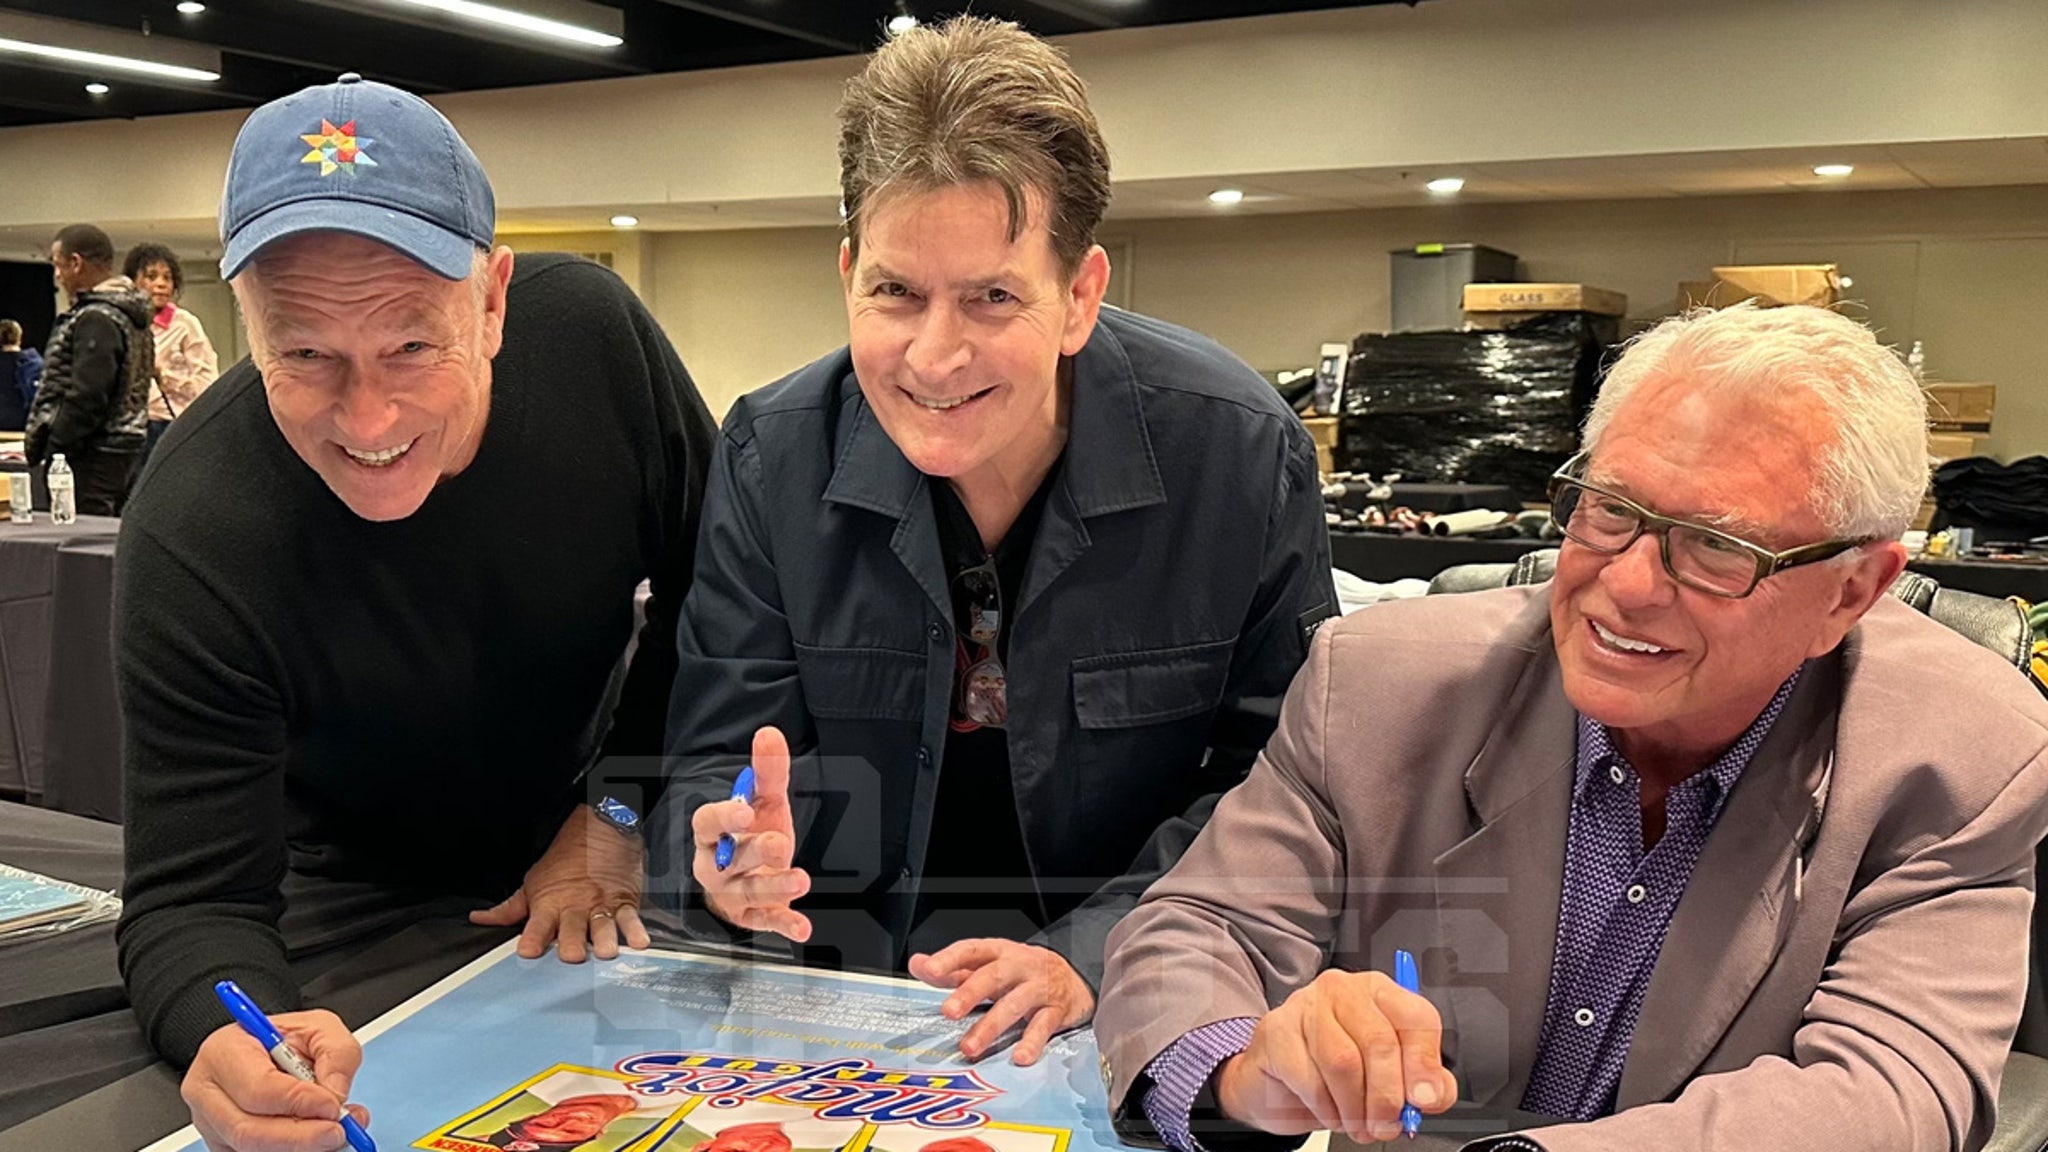 Ricky Vaughn, Roger Dorn, Jake Taylor Reunite At Sports Convention